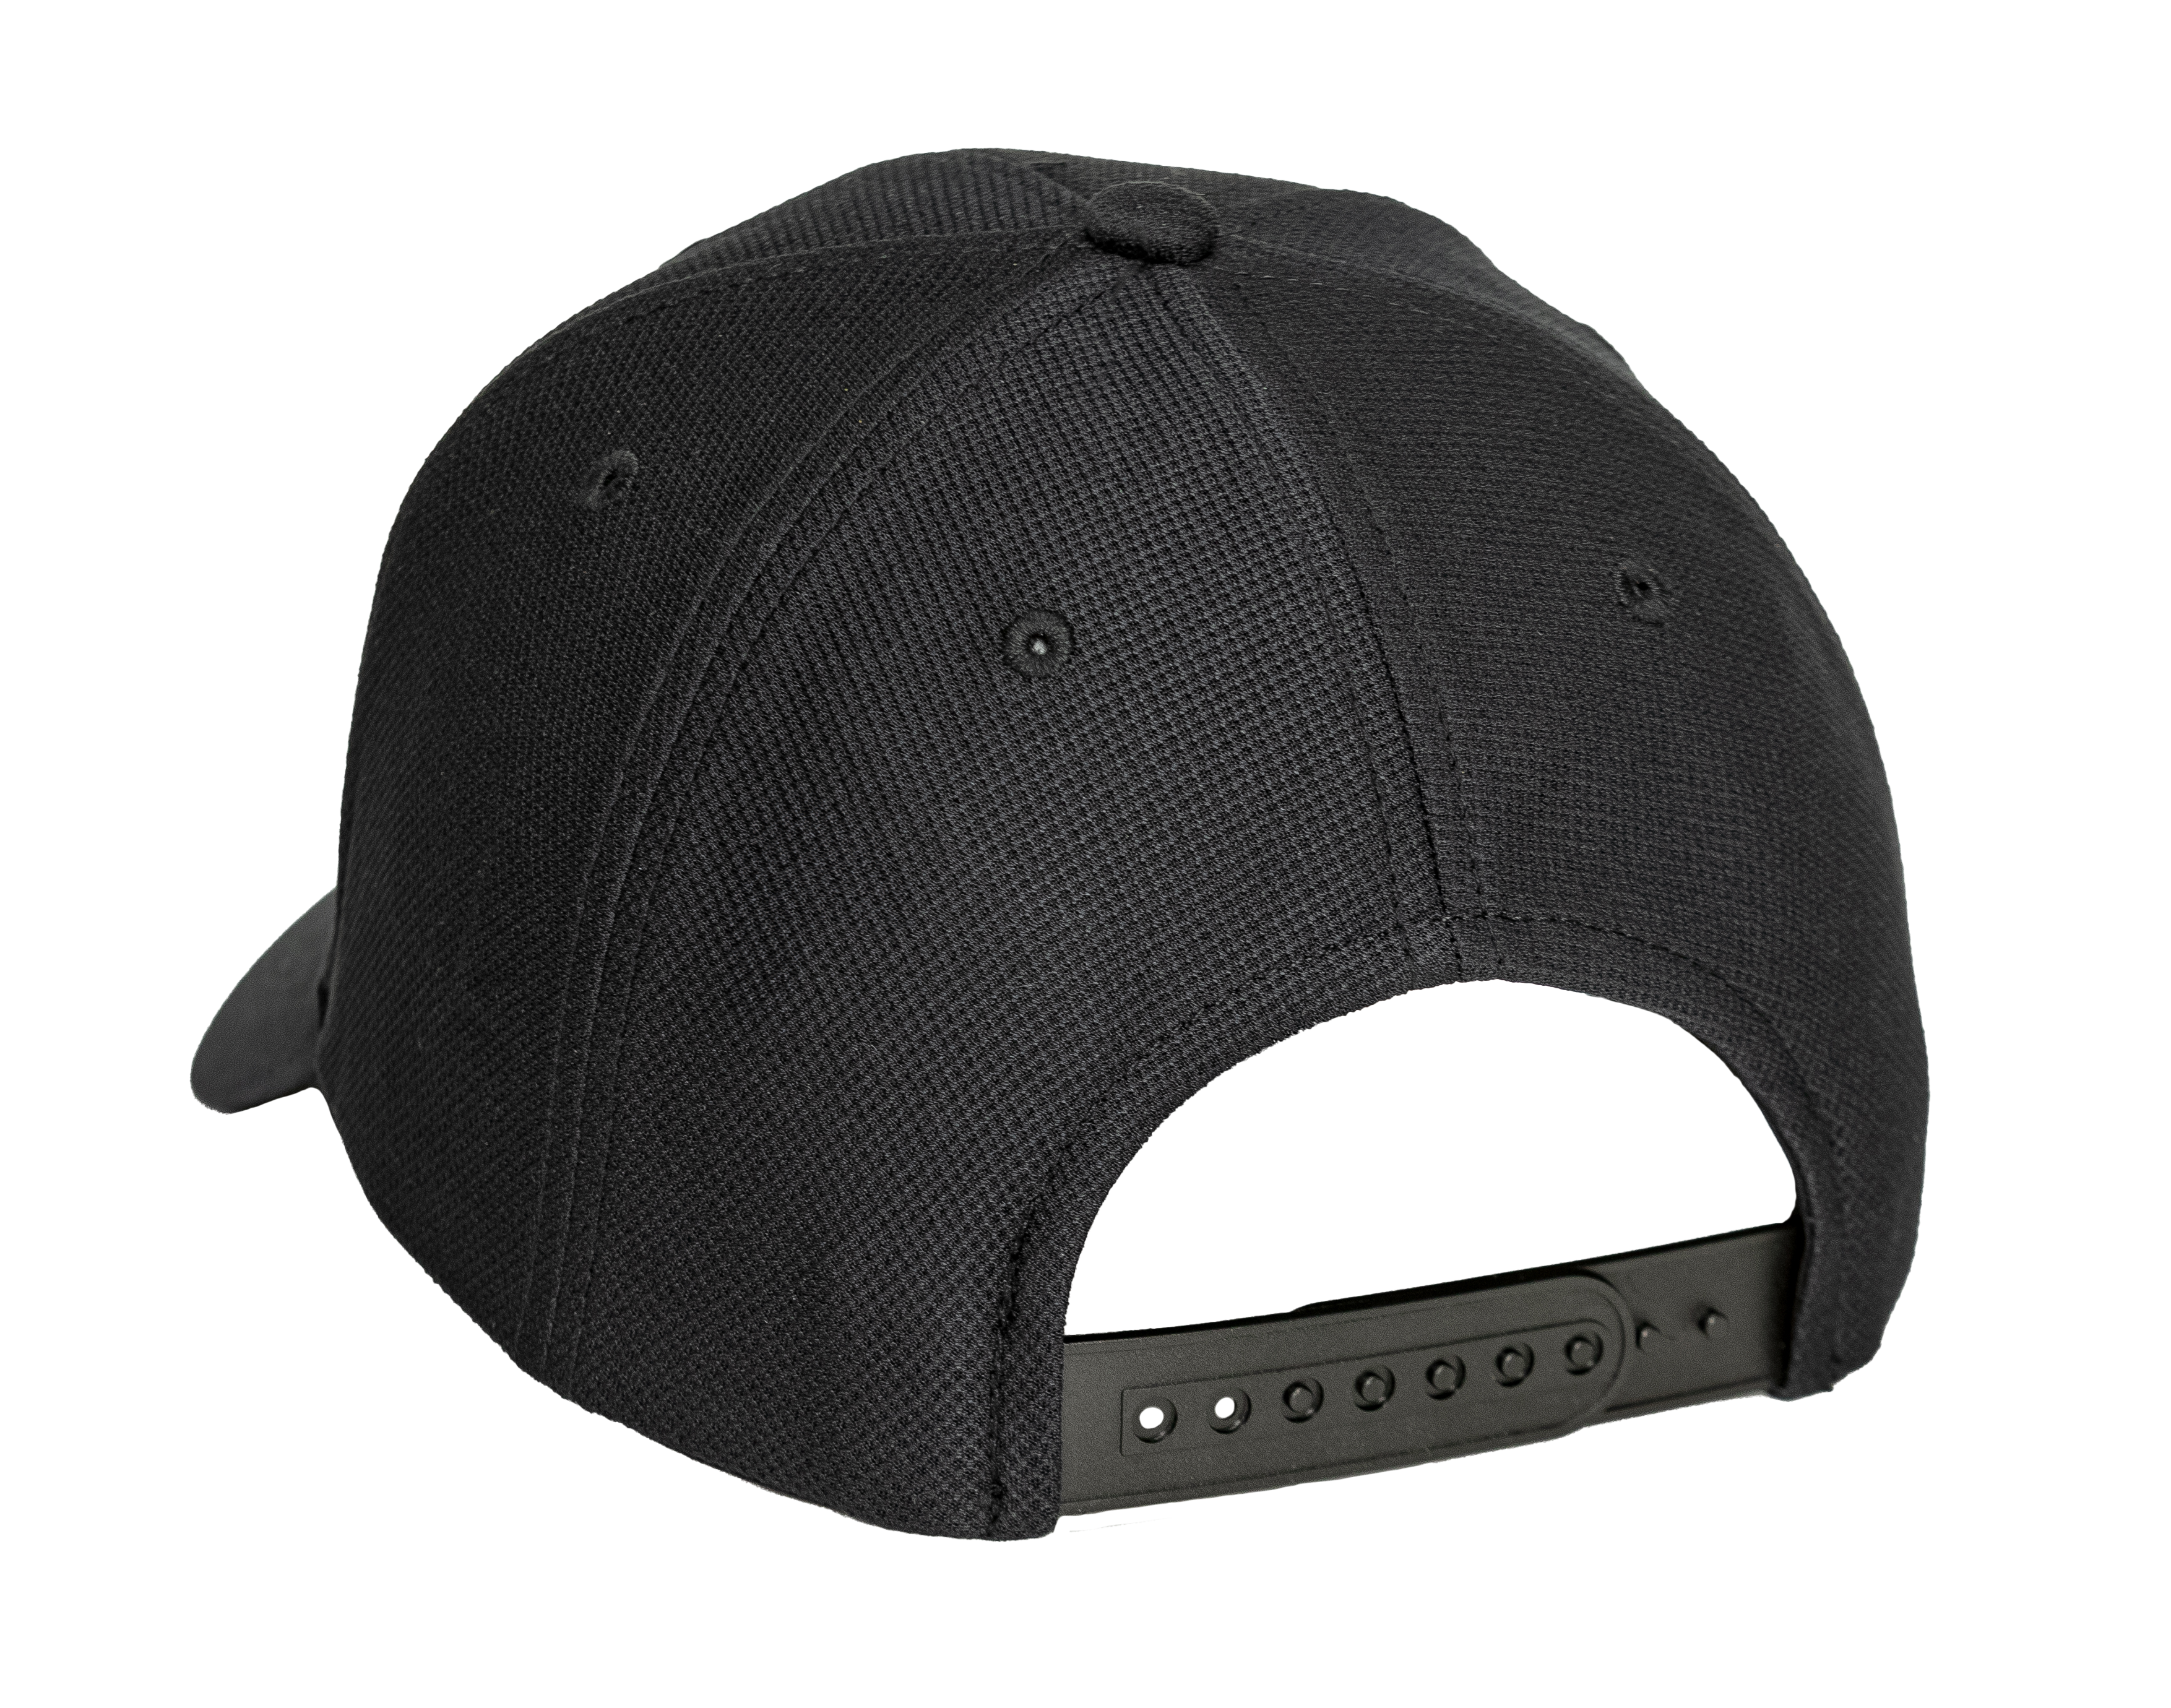 SA Laguna Beach Hat Black/White Logo